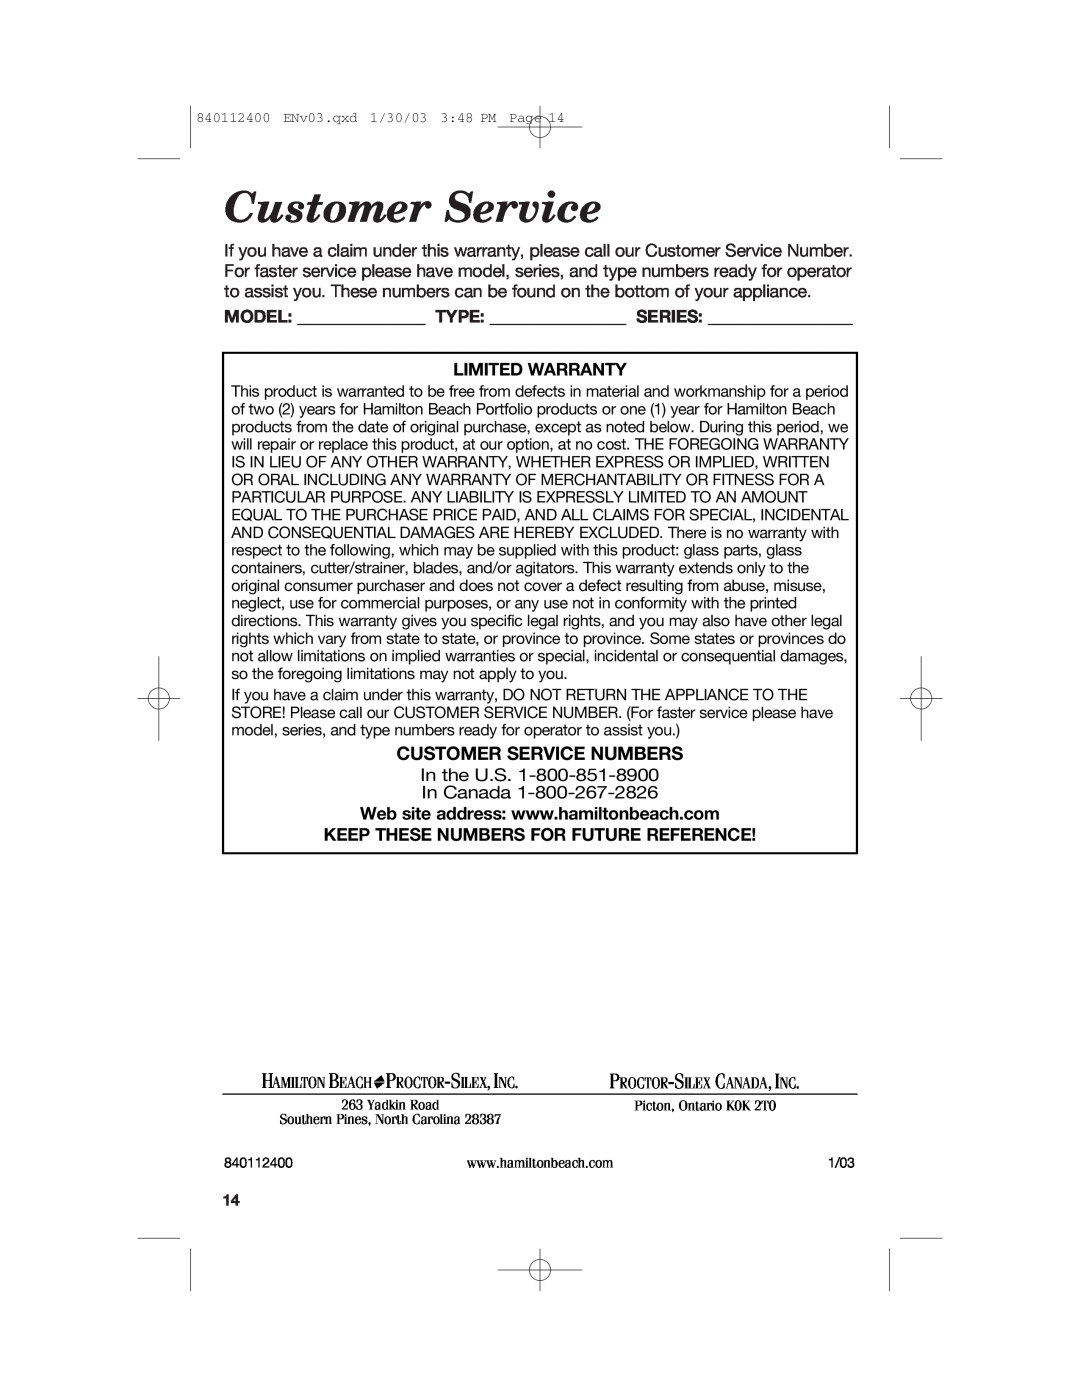 Hamilton Beach 68120 manual Customer Service Numbers, Model Type Series Limited Warranty, Proctor -Silex , Inc 